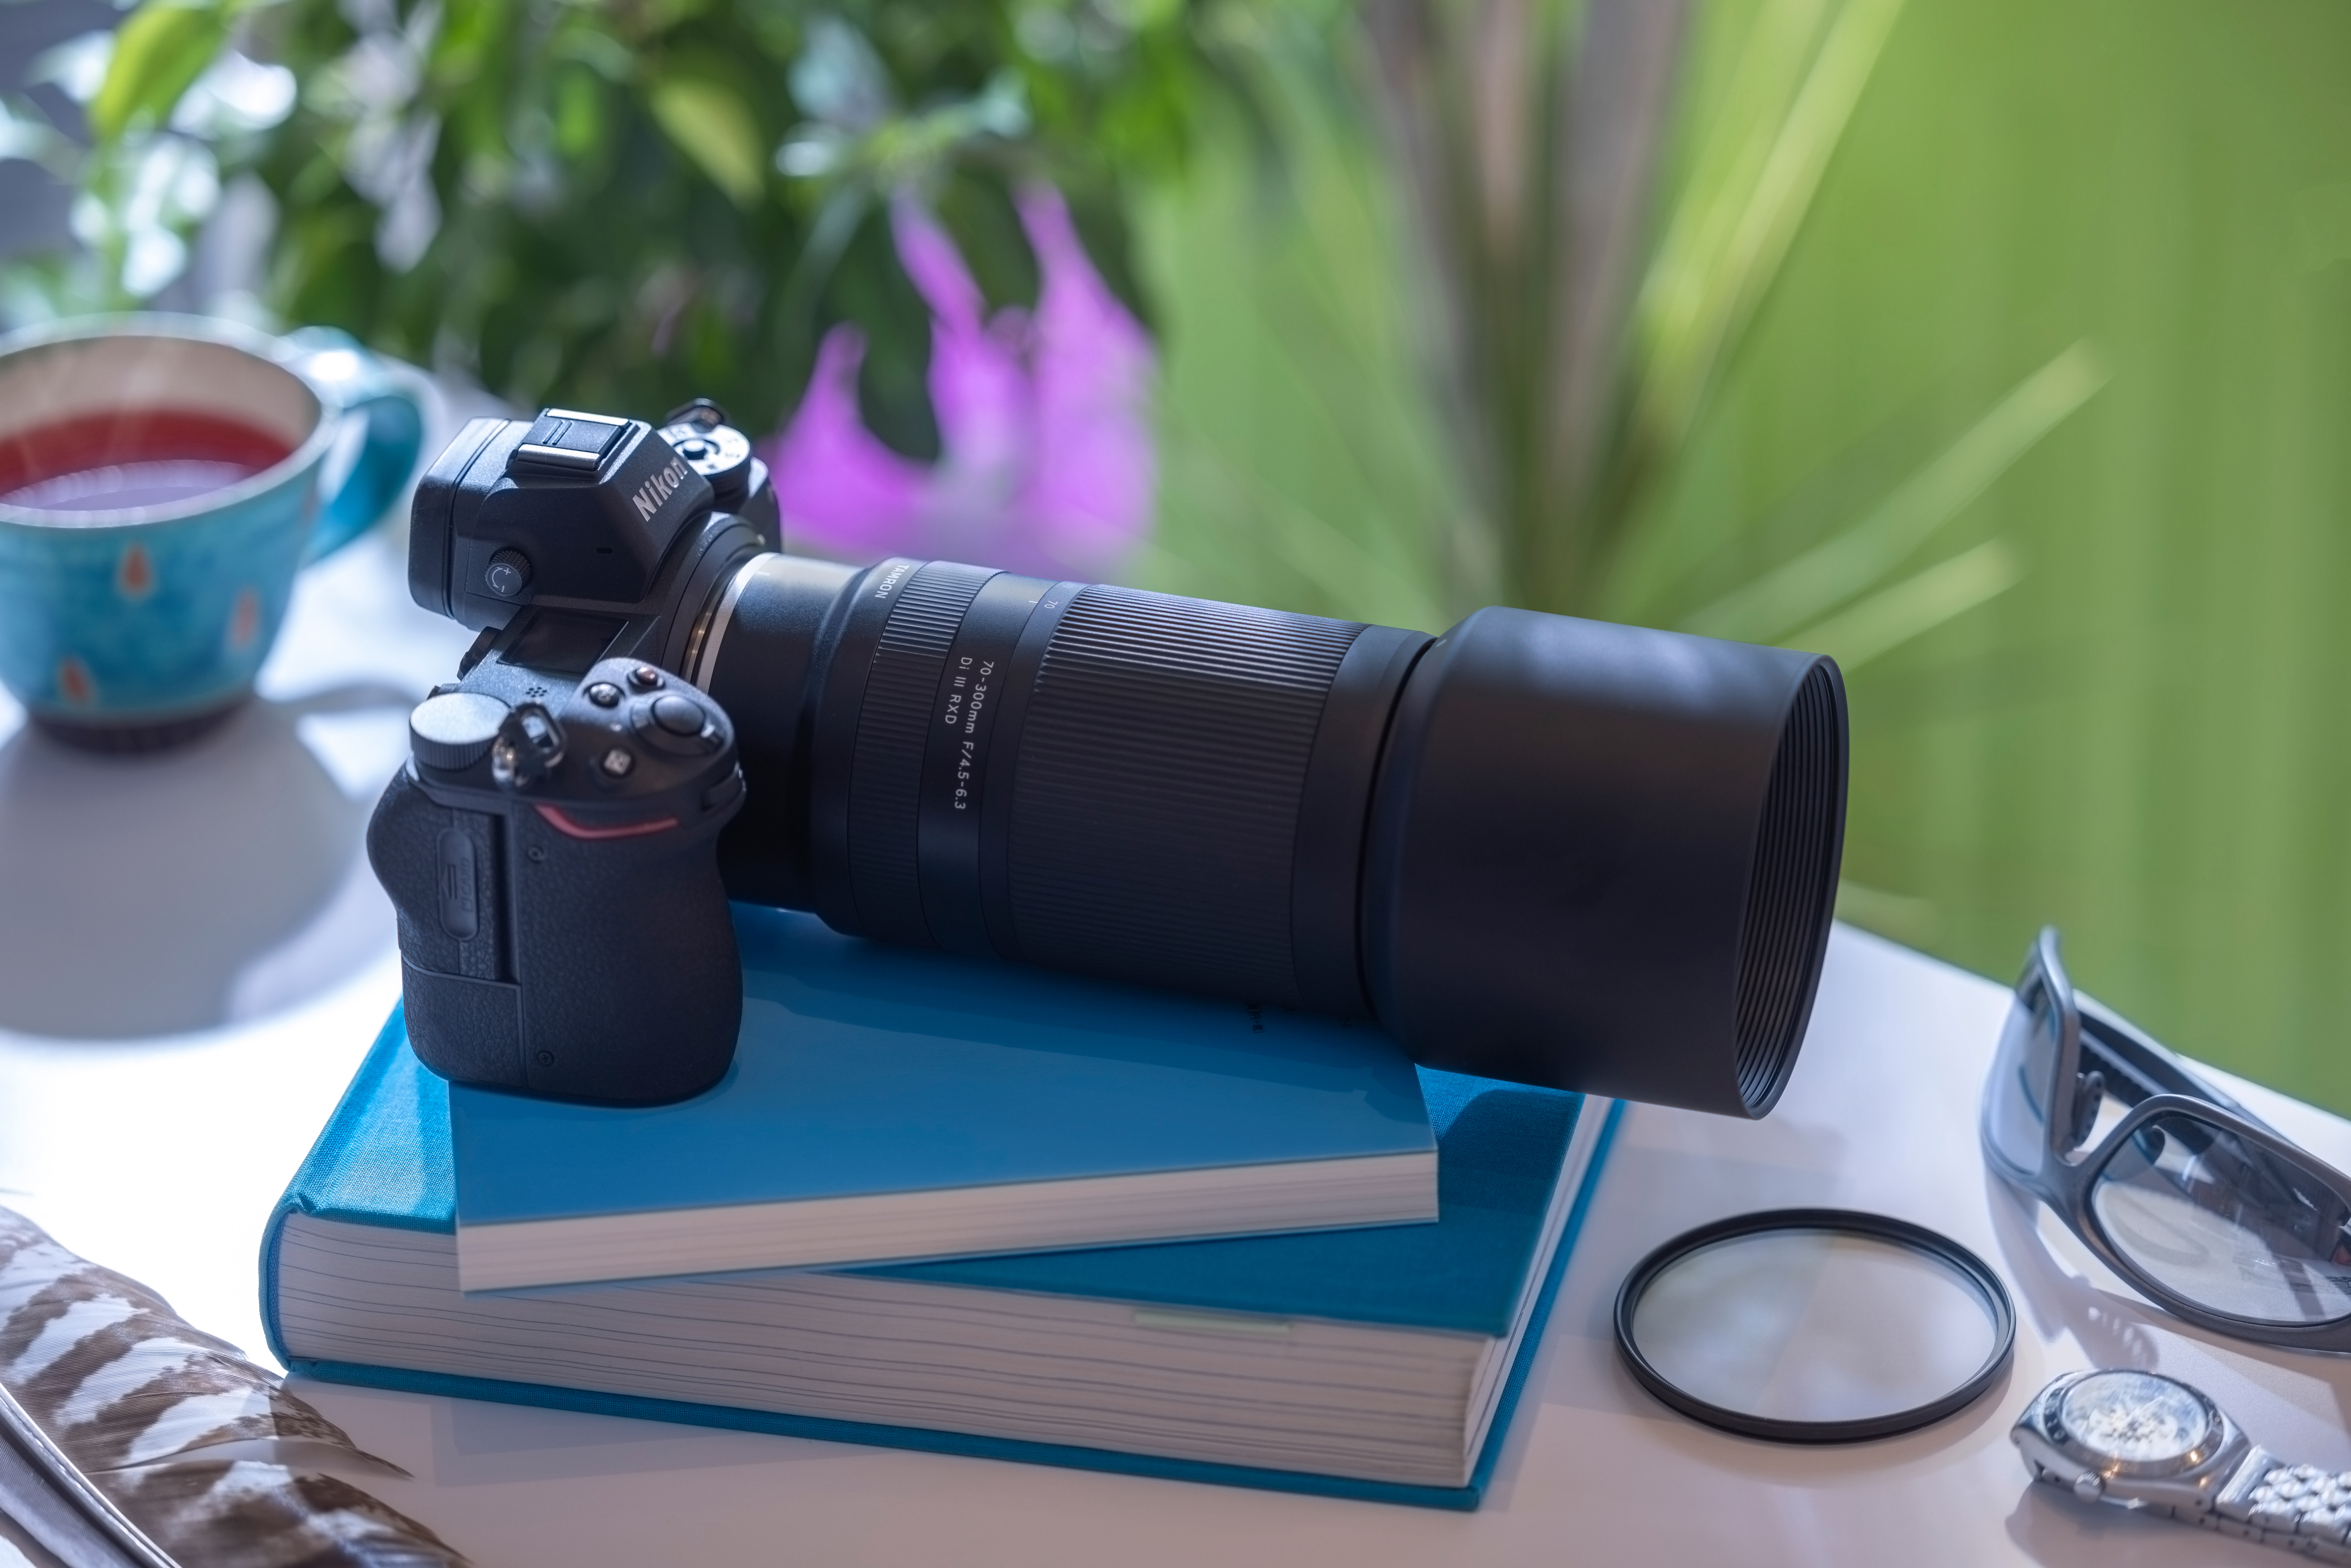 Objektiv Tamron na fotoaparátu Nikon Z položený na knížkách